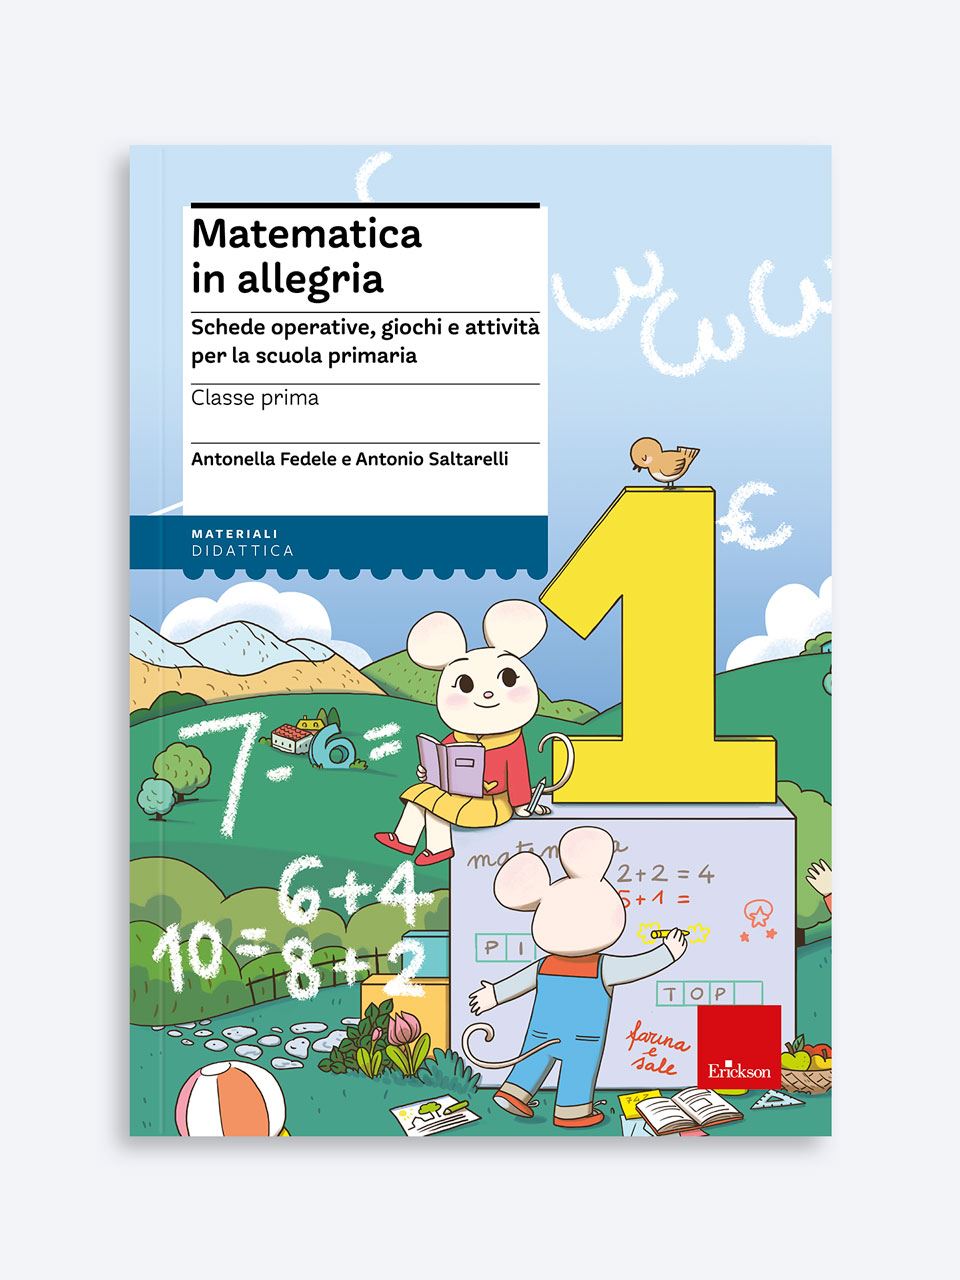 Matematica in allegria - Classe prima - App e software - Libri - Erickson 2